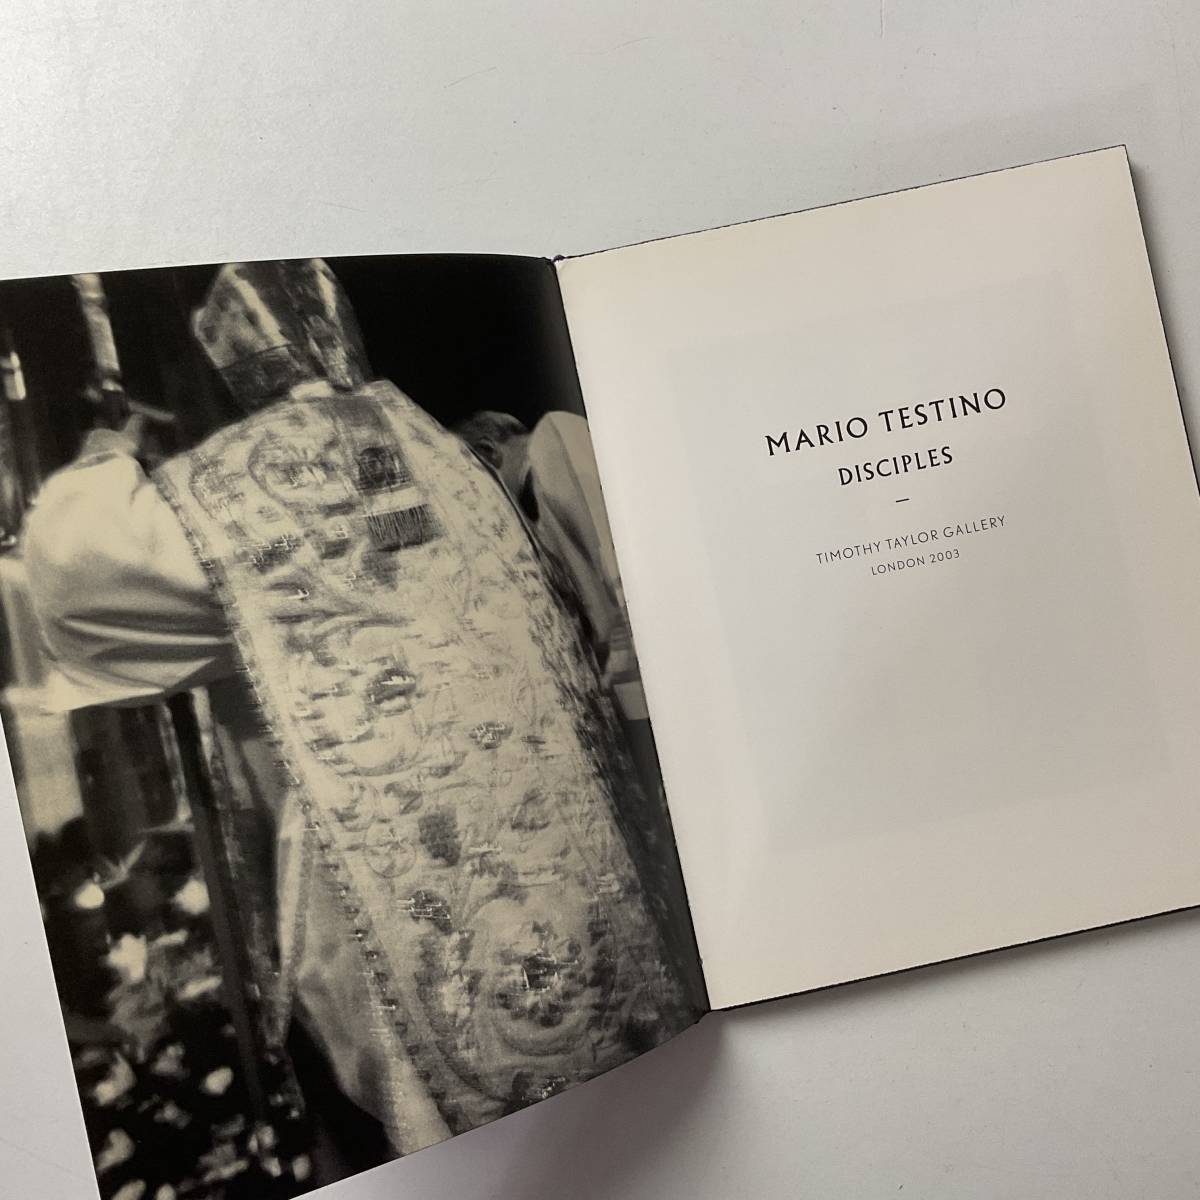  limitation photoalbum MARIO TESTINO Disciples 2003 TIMOTHY TAYLOR GALLERY Mario tes Tino hard-to-find rare old book 